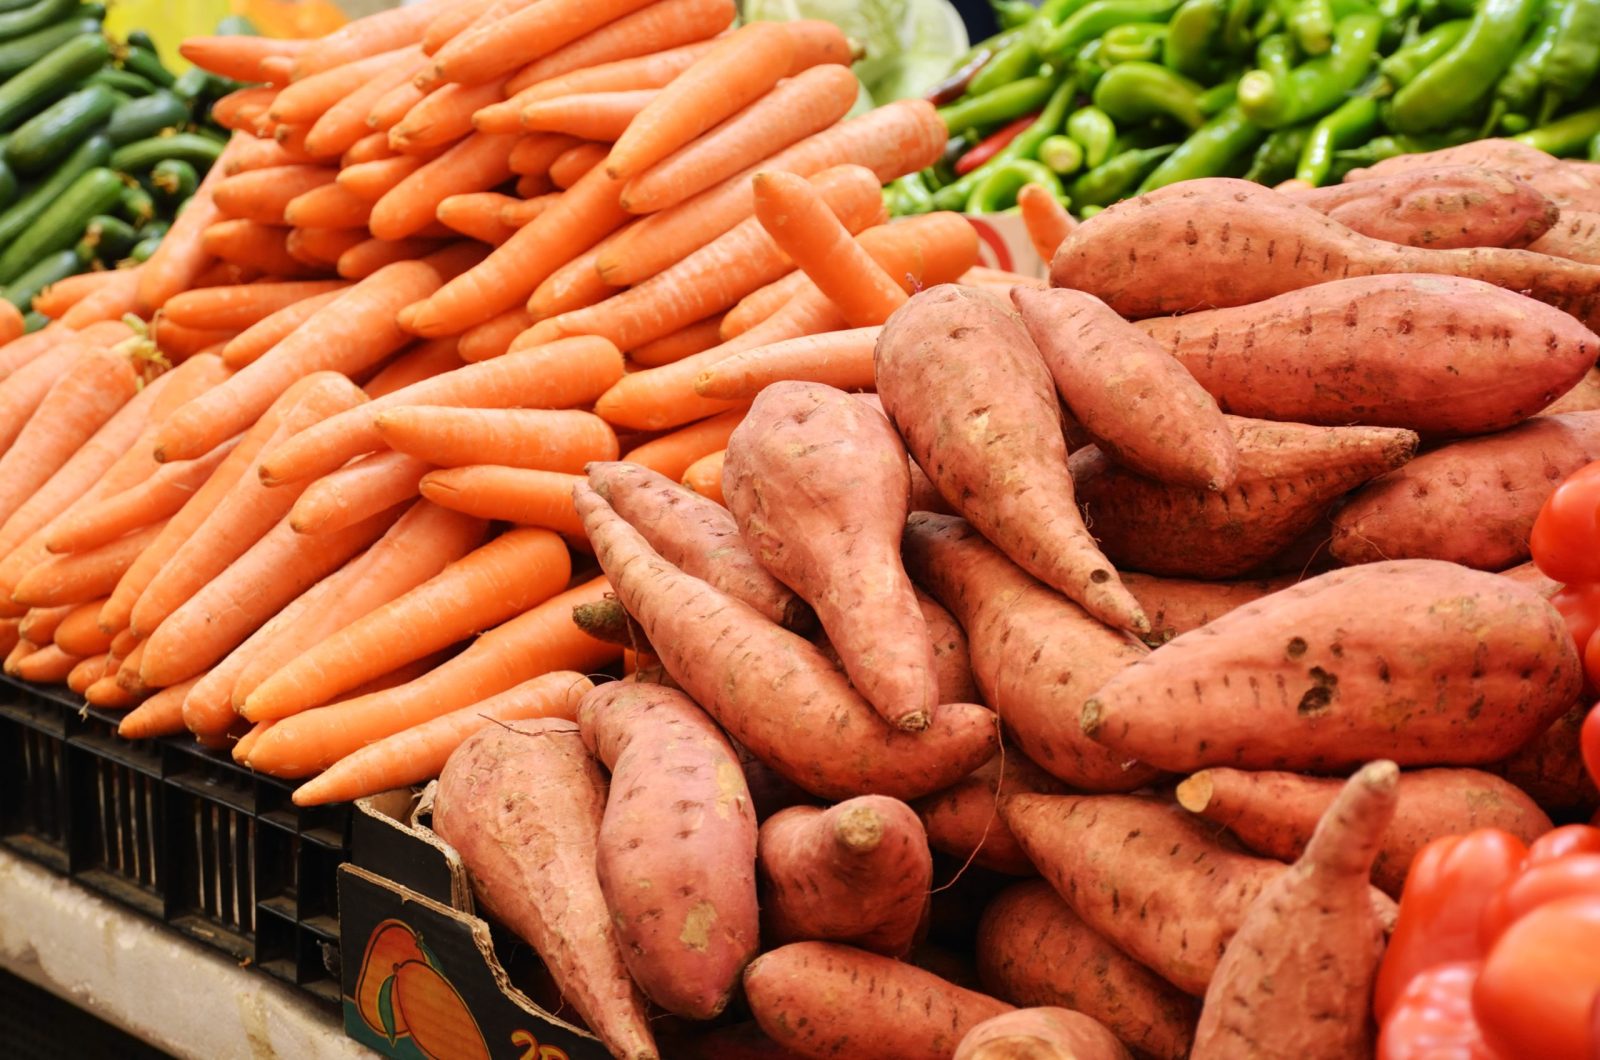 Carrots and sweet potatoes